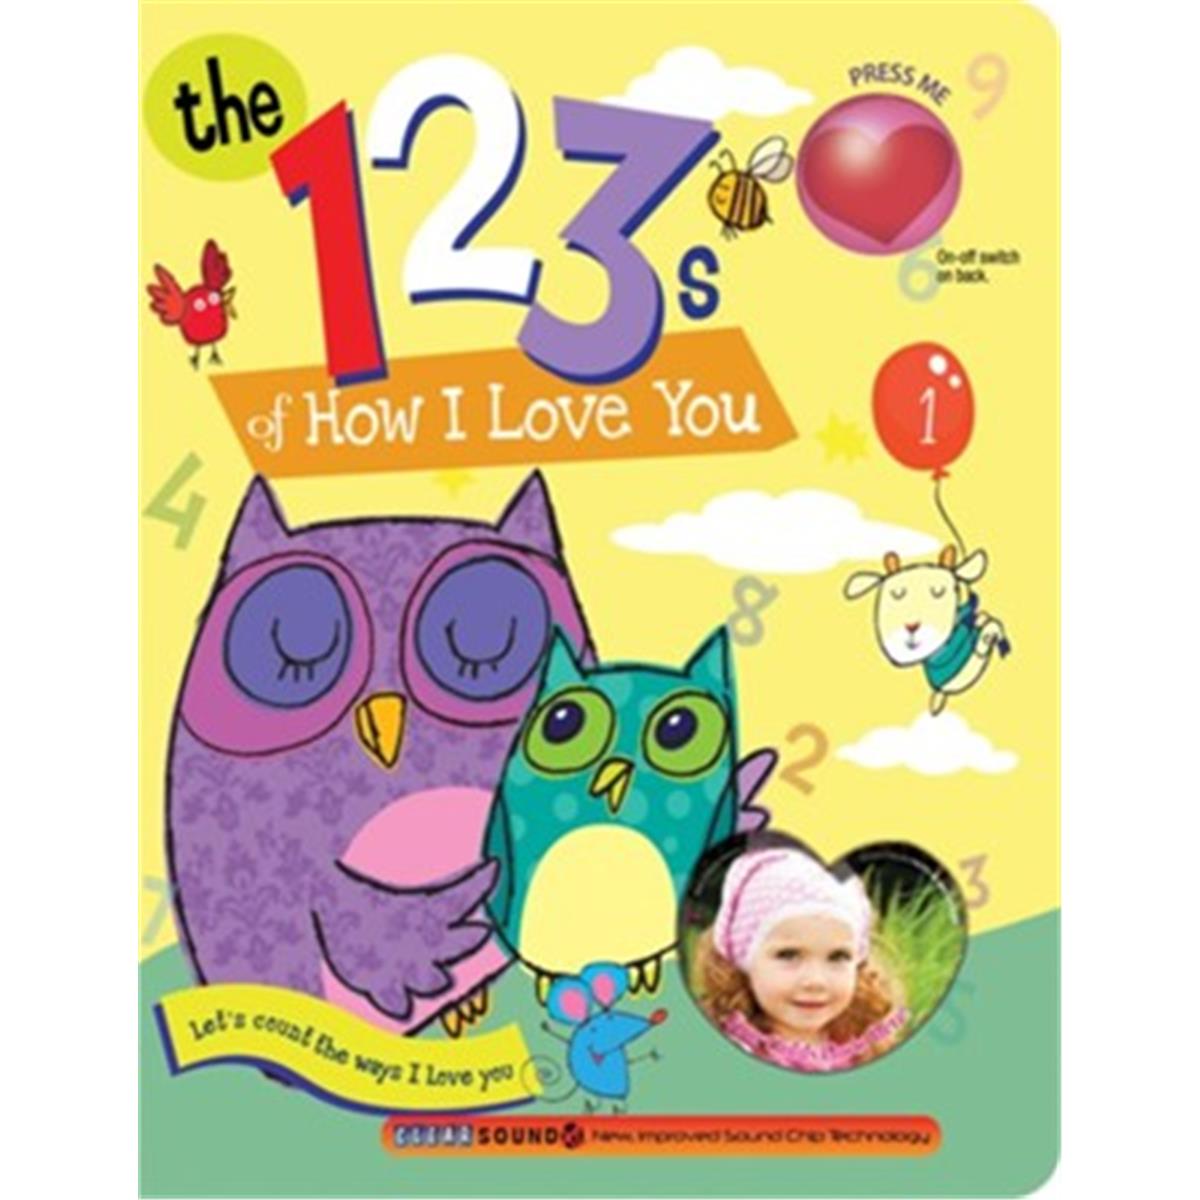 Smart Kidz 772223 123s Of How I Love You - Kidzsize Clearsound Books